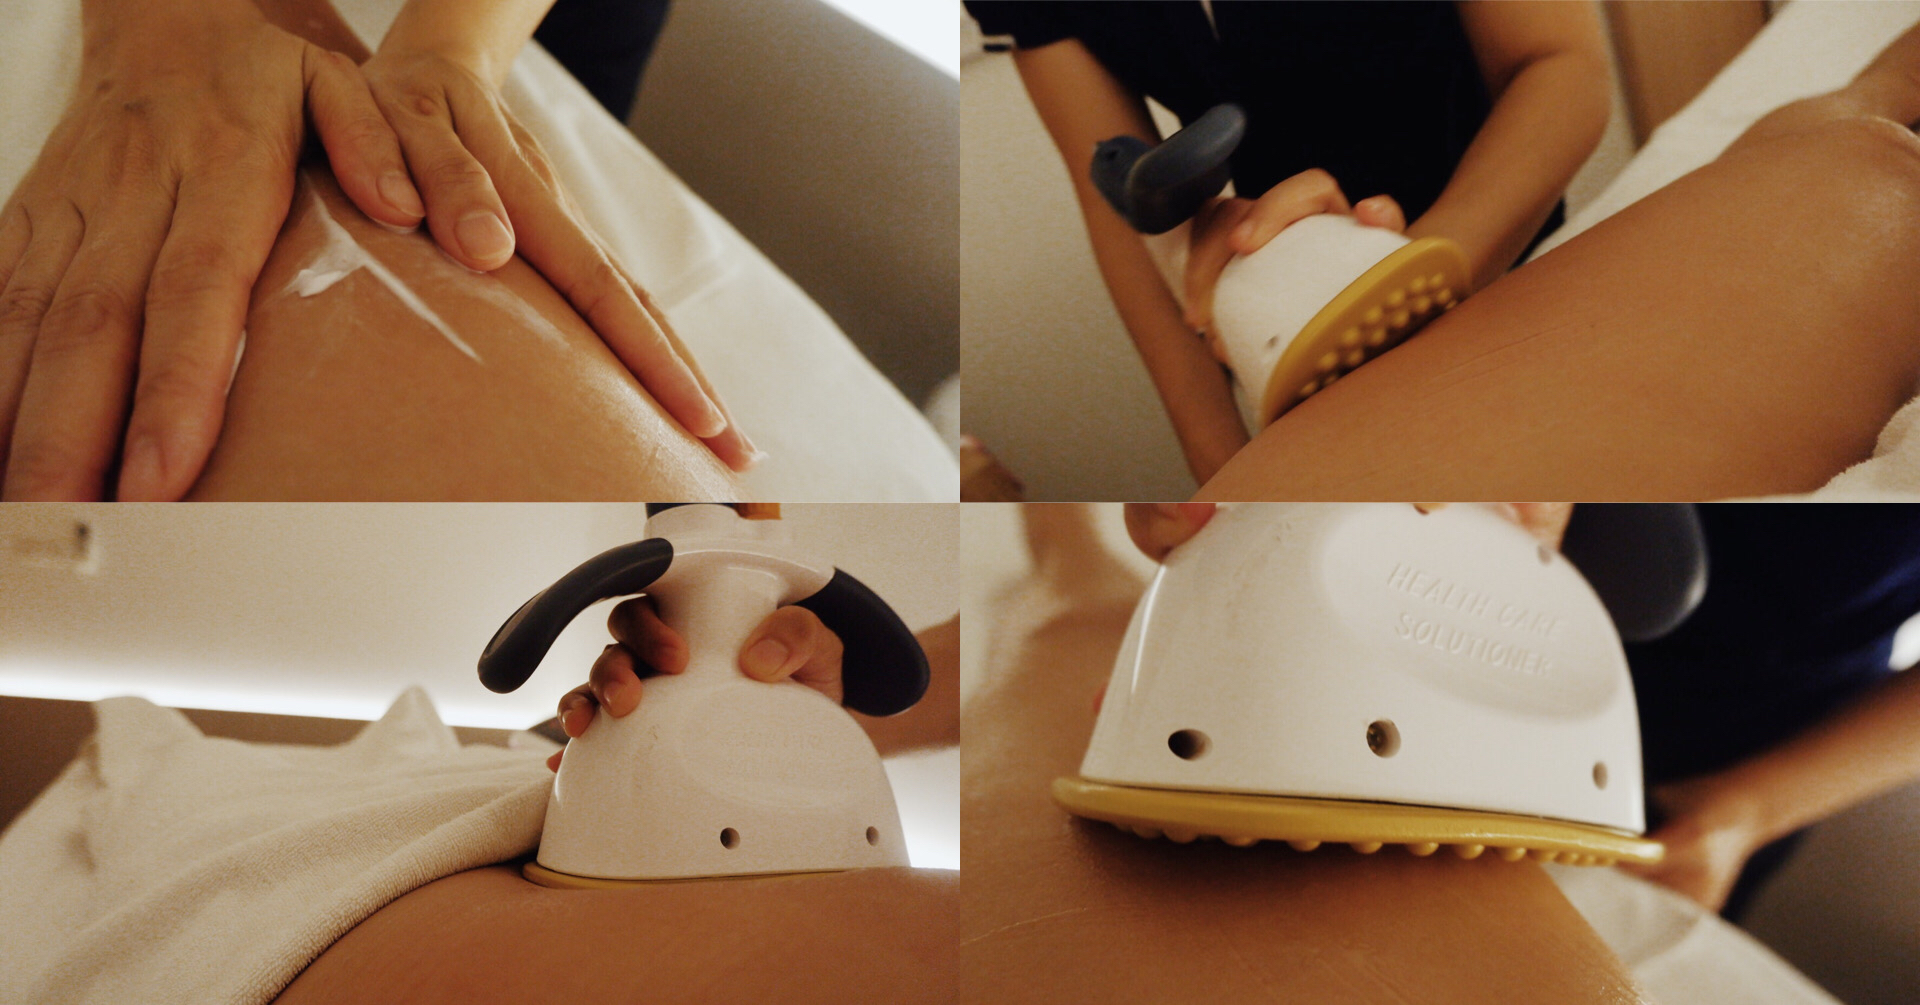 Le'viya Wellness Spa – [REVIEW] รีวิว Cellulite Massage นวดขจัดไขมัน (เซลลูไลท์)